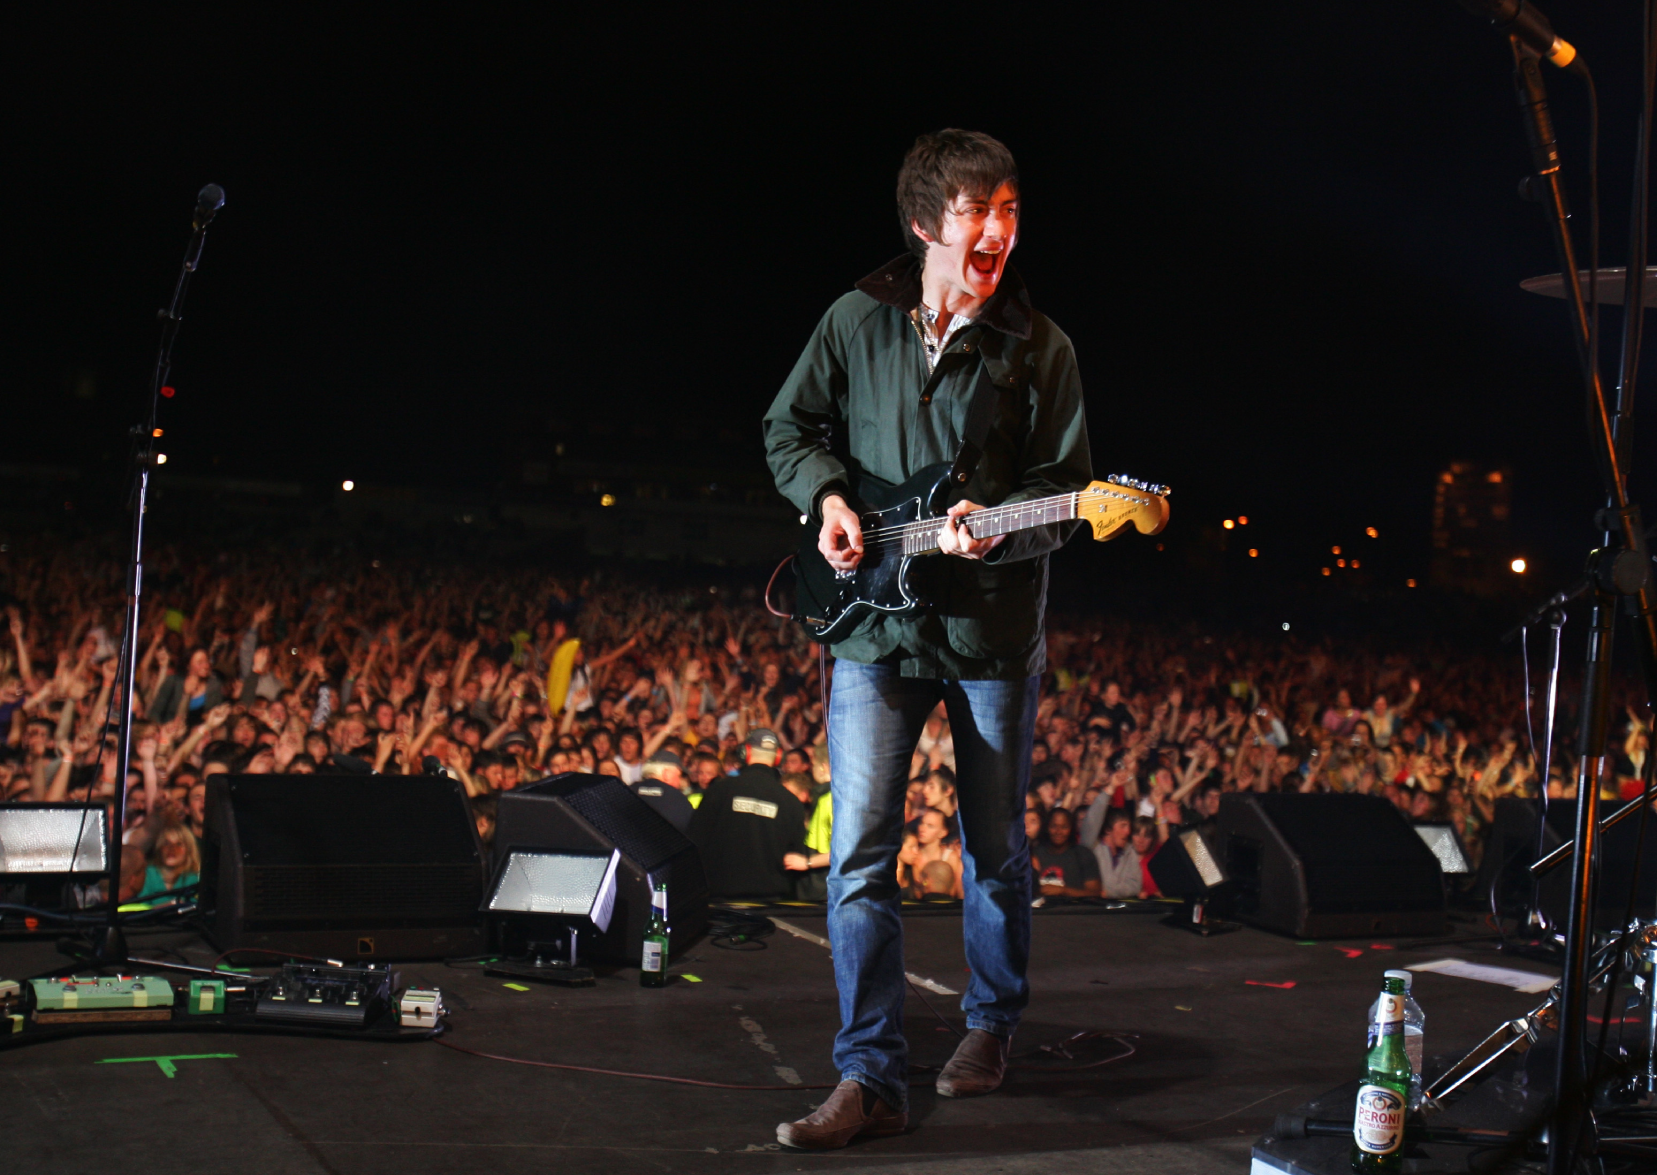 Arctic Monkey, Alex Turner, wearing Barbour jacket on stage